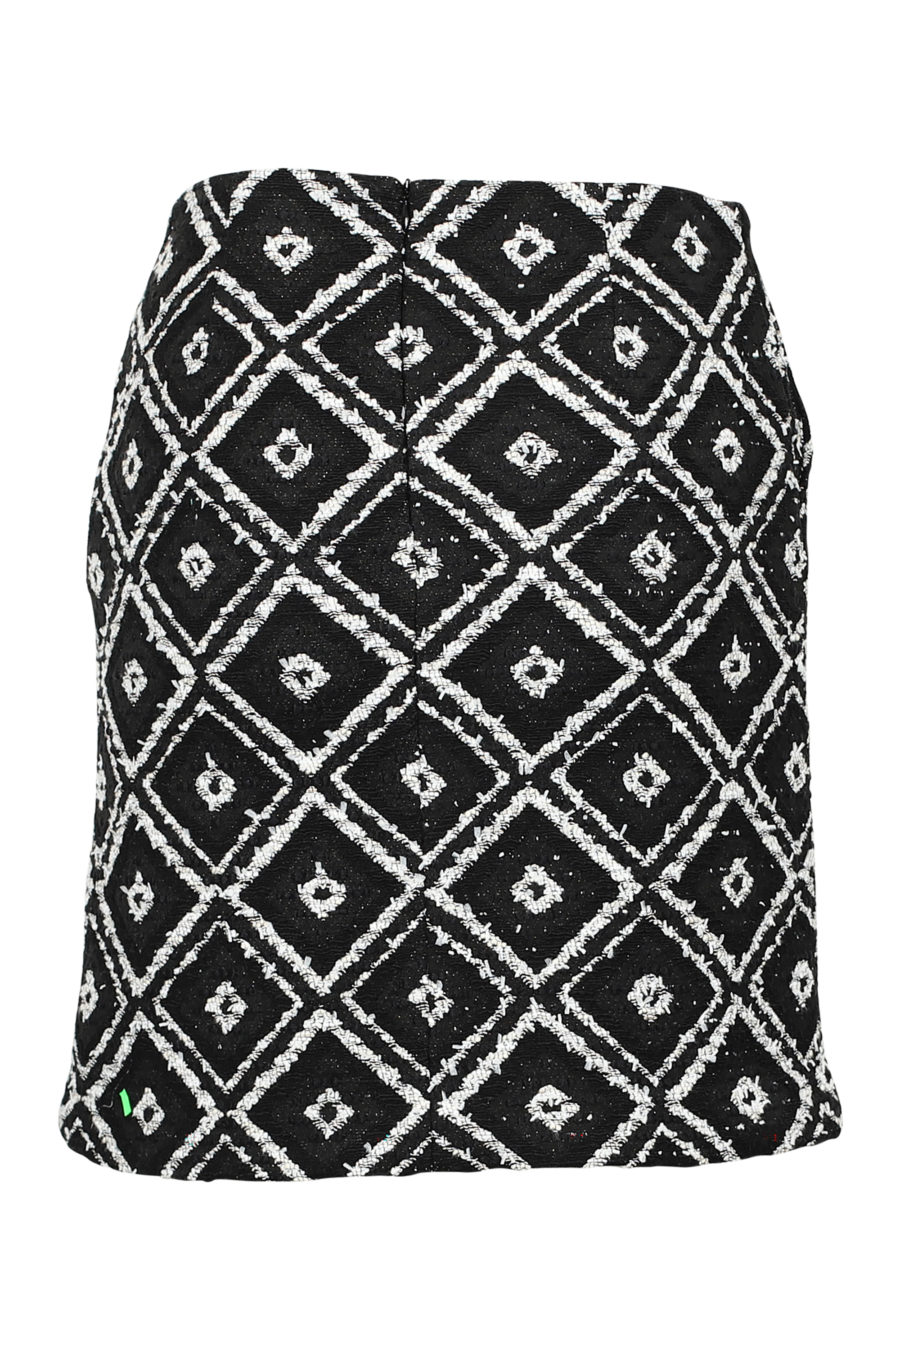 Black and white geometric skirt "Boucle" - IMG 3180